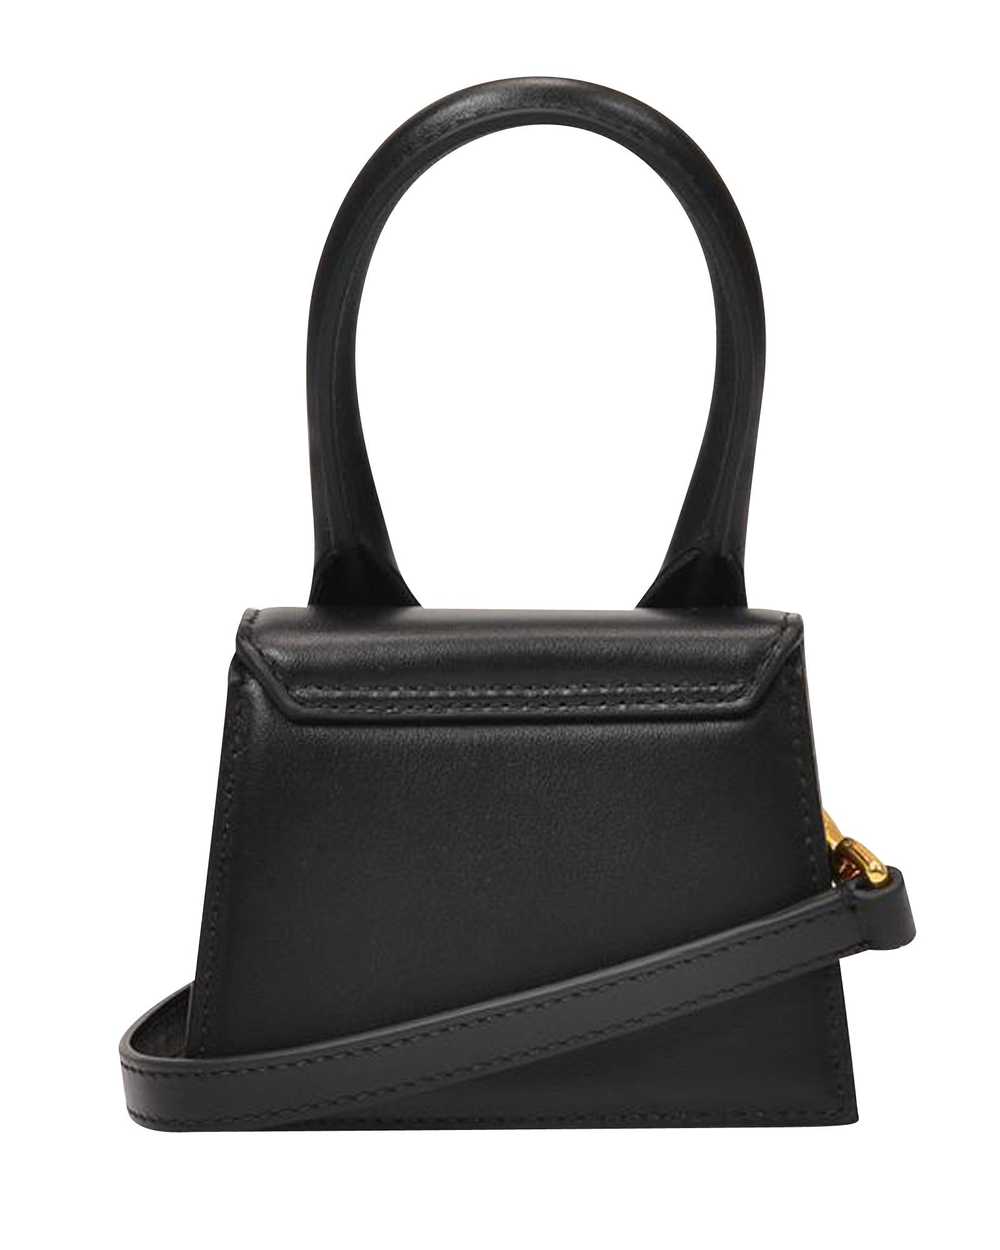 Product Details Black Leather Le Chiquito Bag - image 2